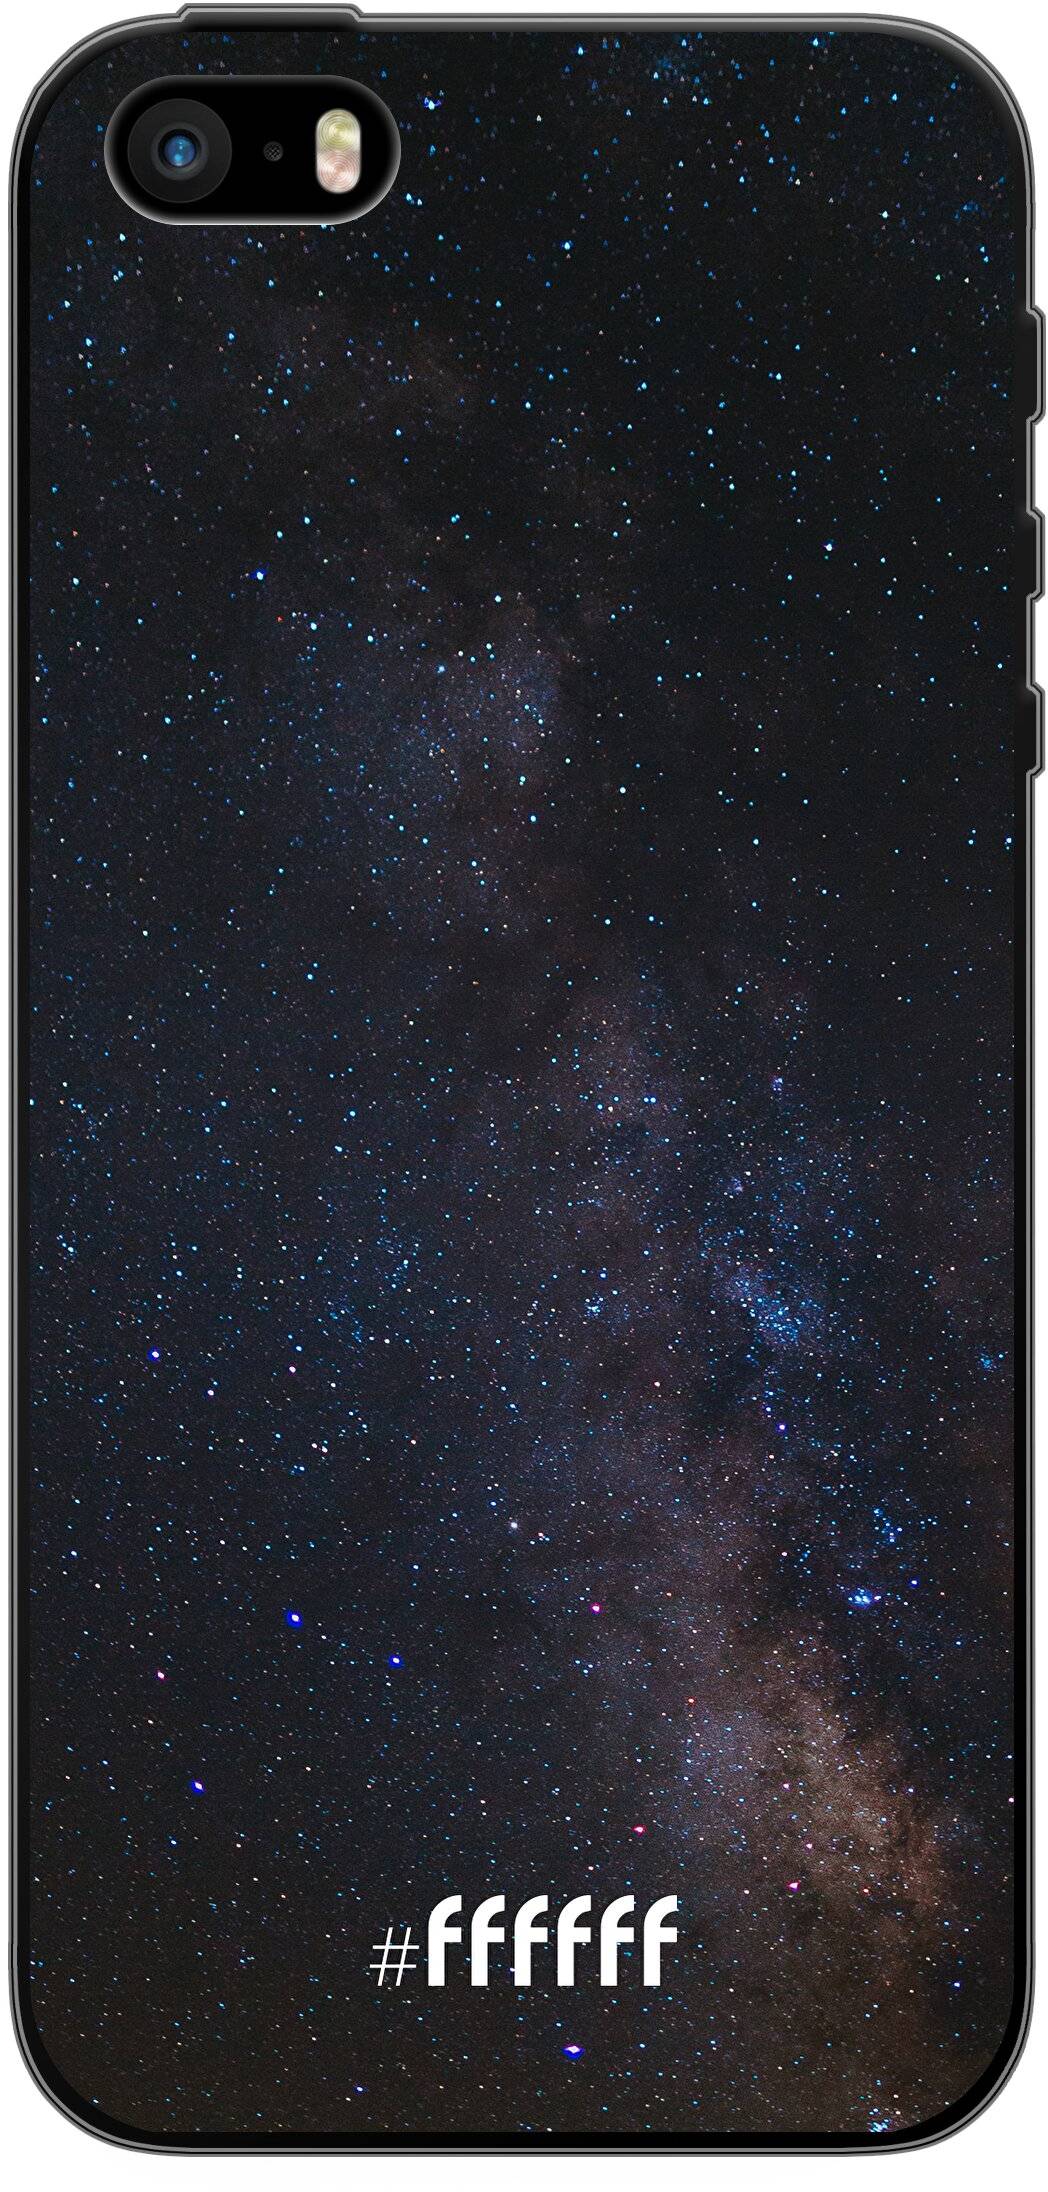 Dark Space iPhone 5